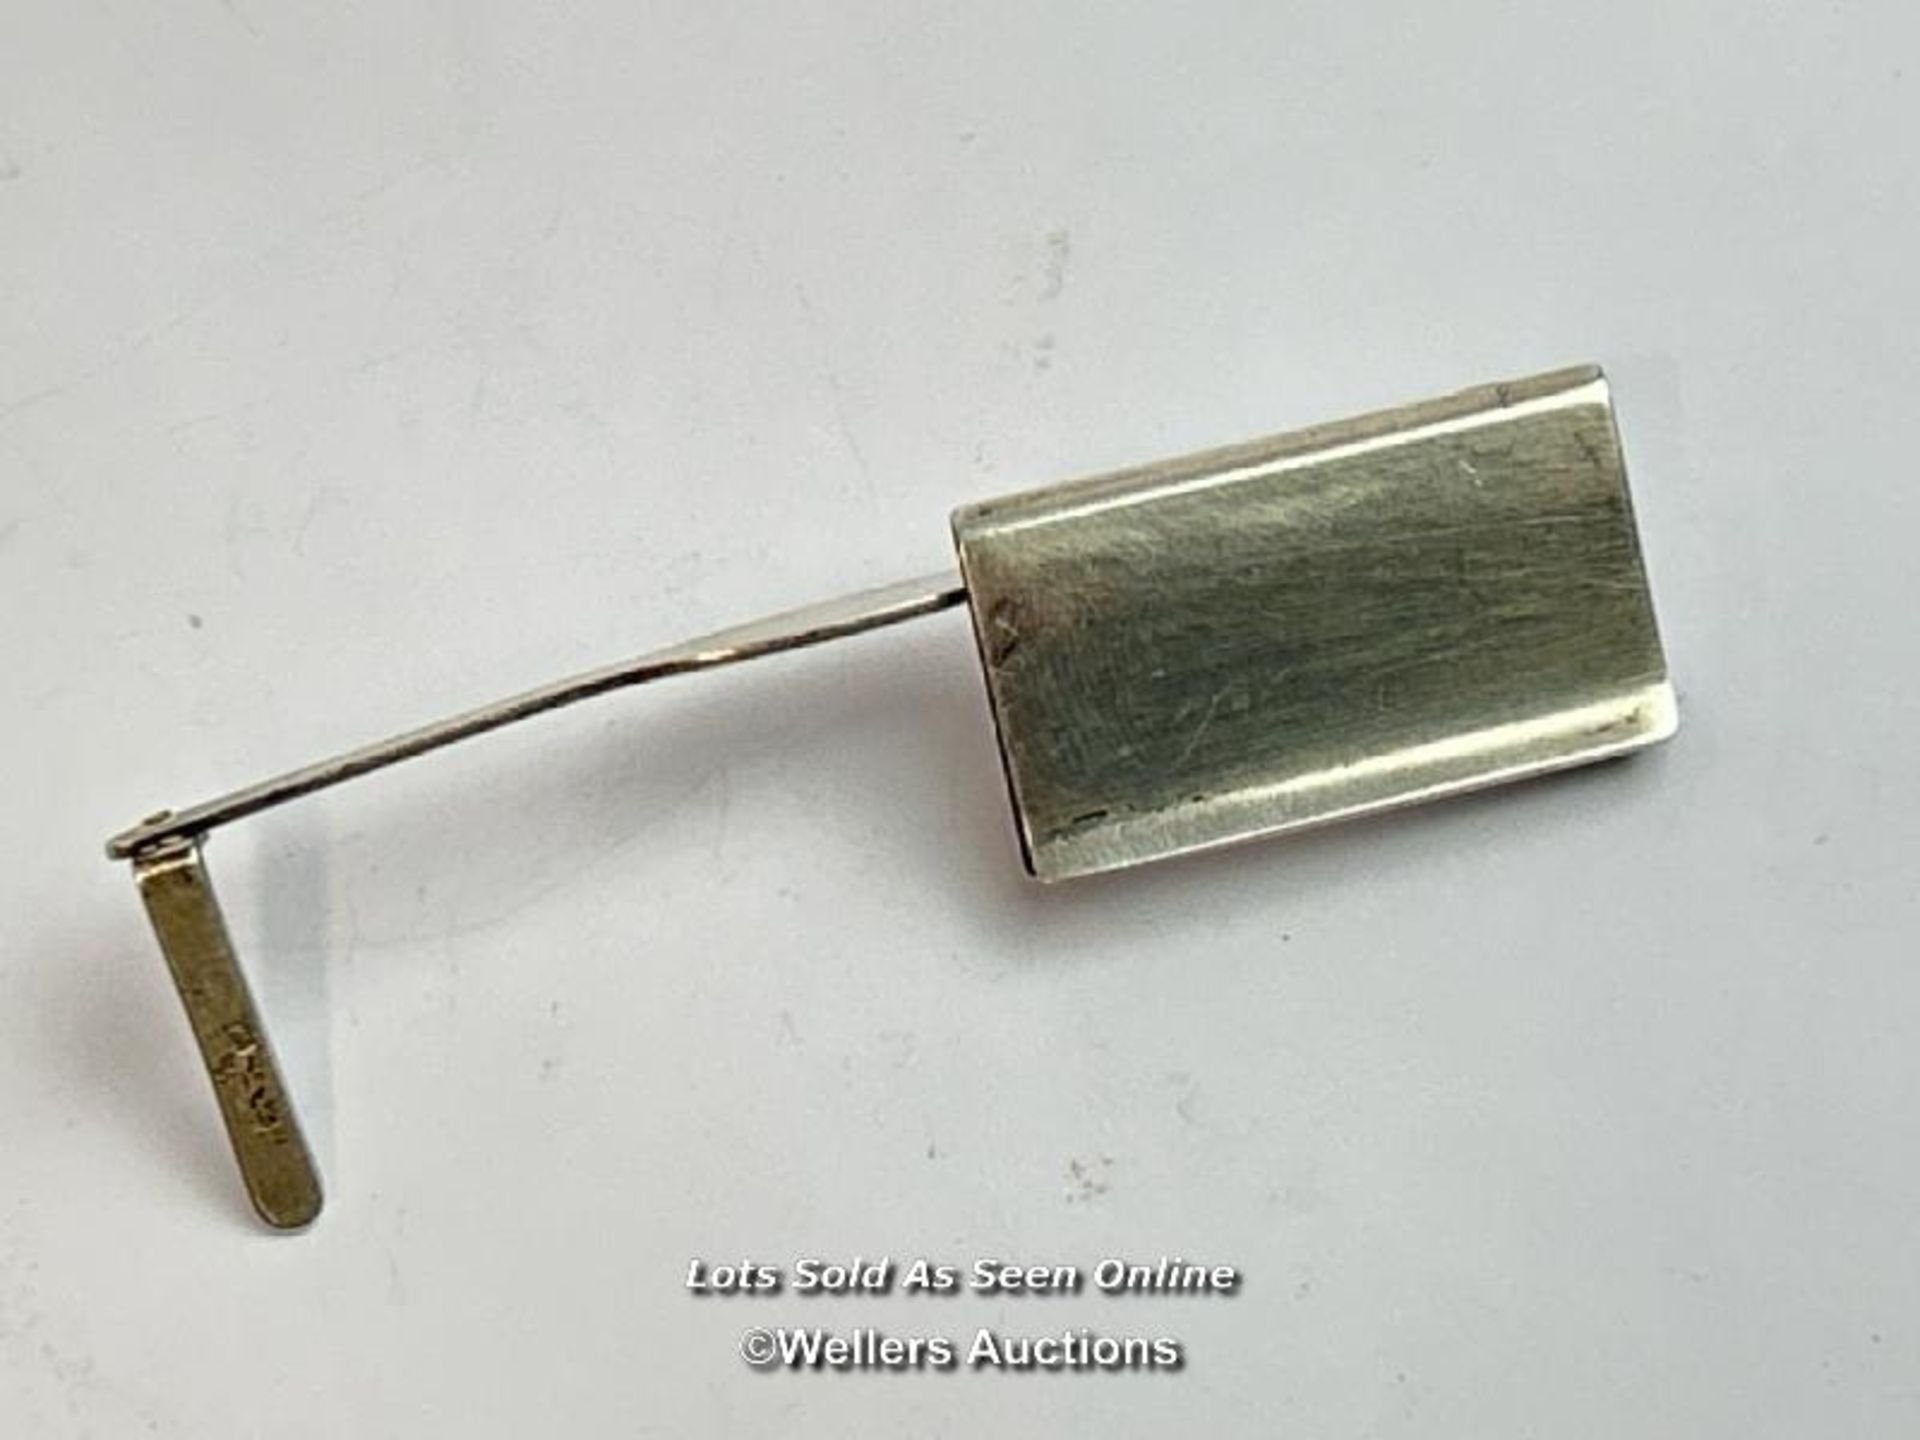 Asprey & Co Patent silver lever bookmark, PAT No 257529, Birmingham 1934, 6.5cm long, 9g / SF - Image 4 of 4